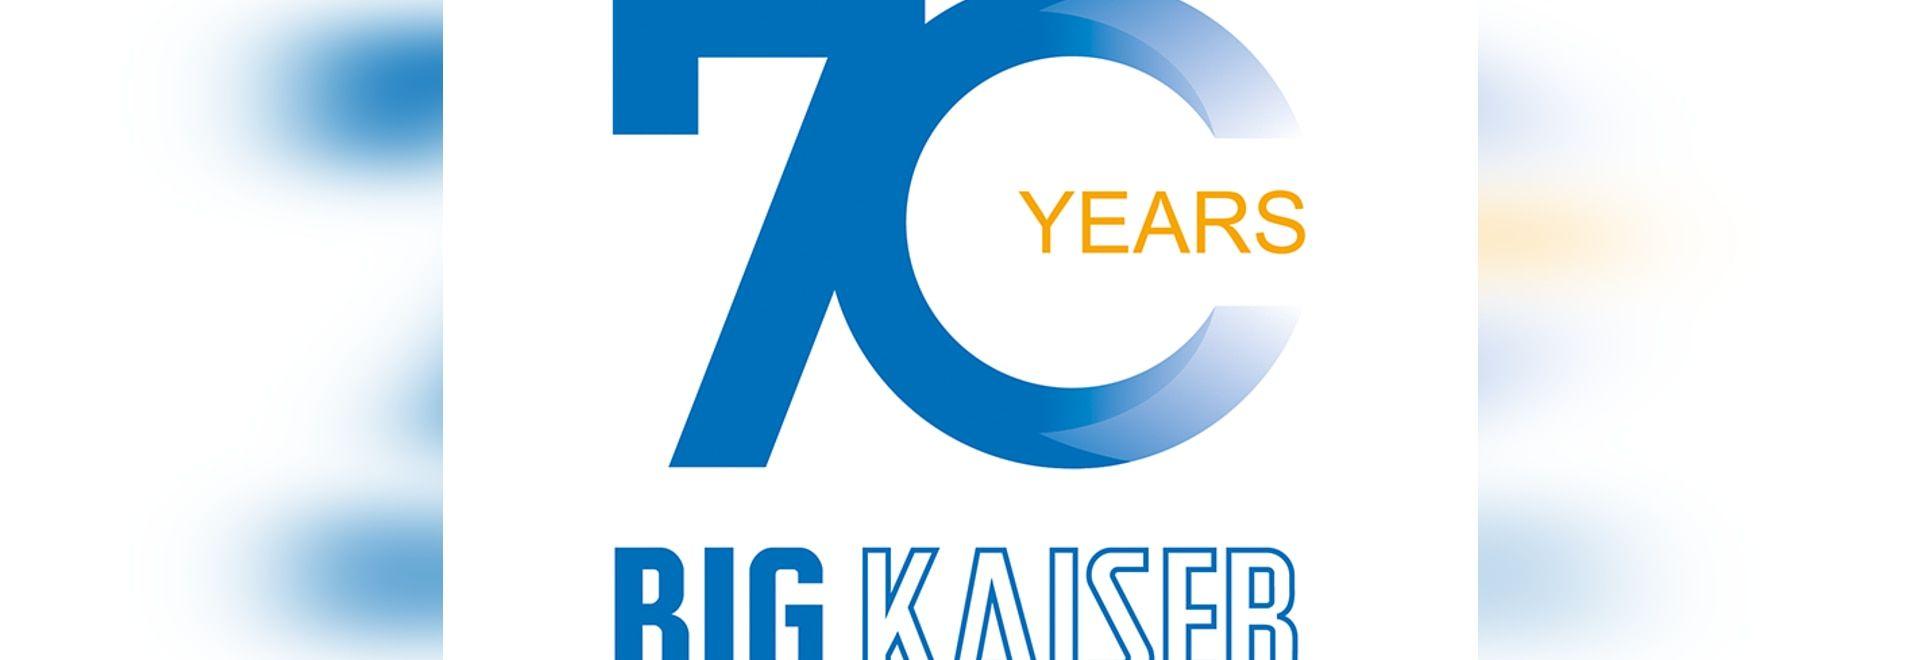 Big Kaiser Logo - BIG KAISER Precision Tooling celebrates 70 years - Glatttalstrasse ...